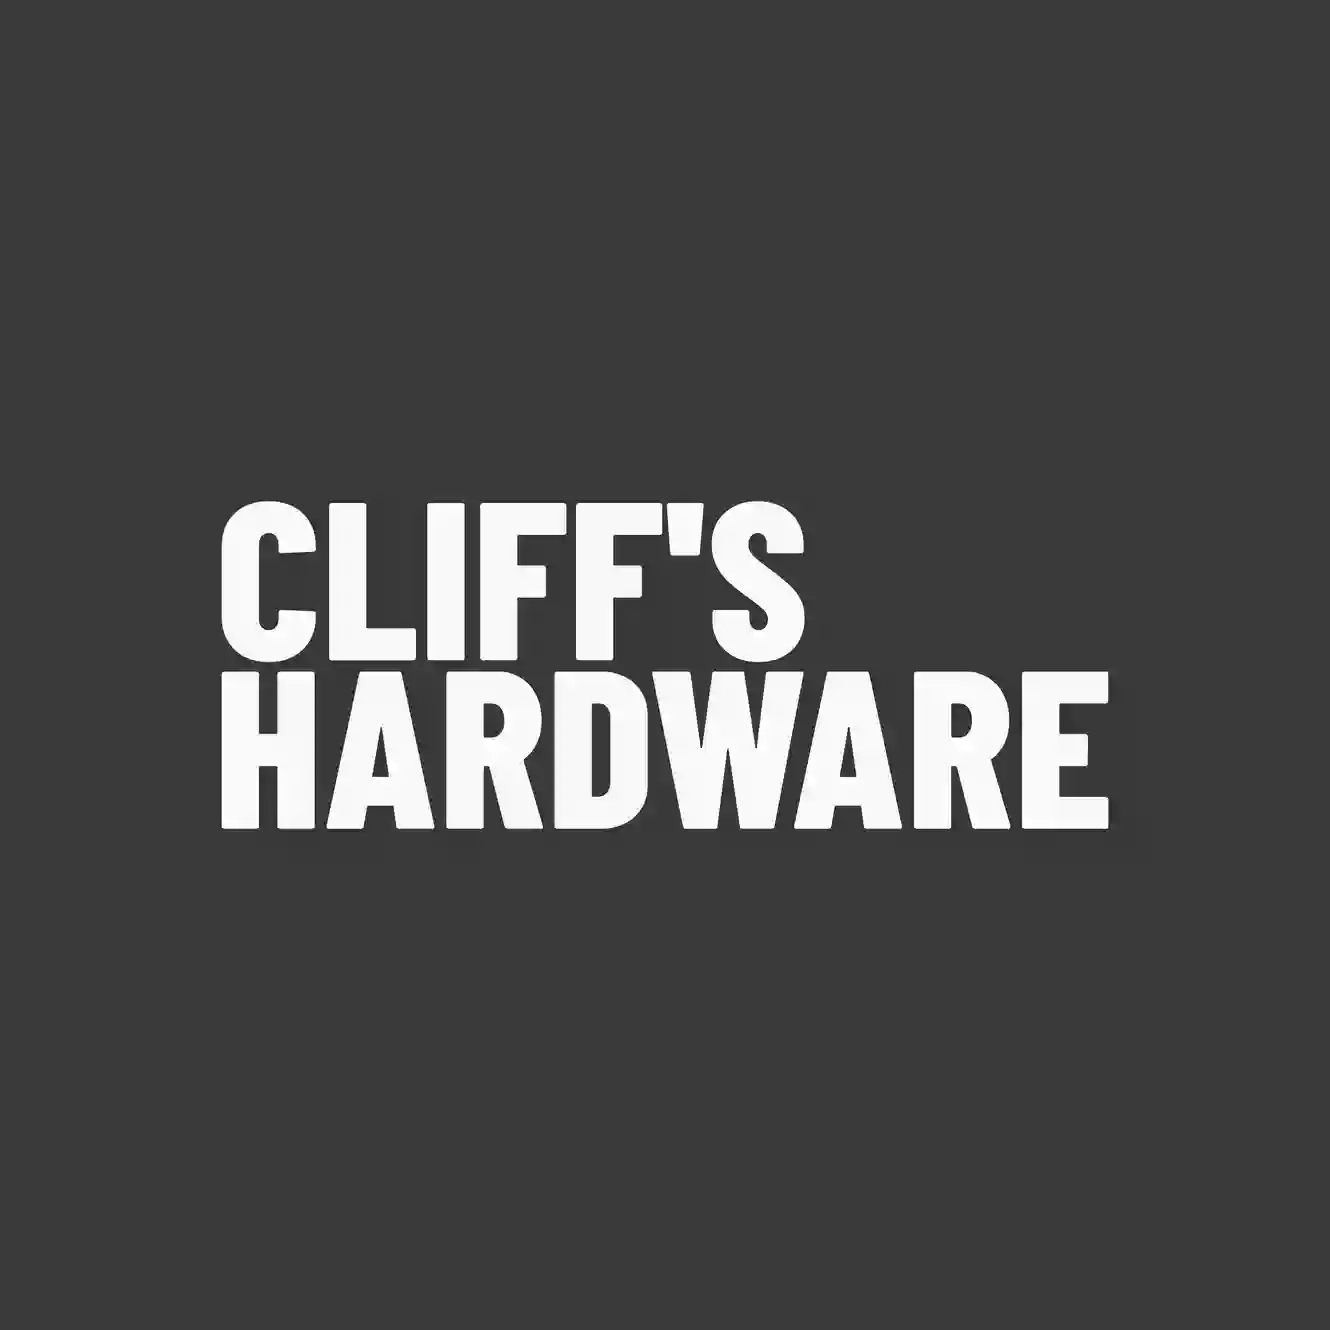 Cliff's Hardware